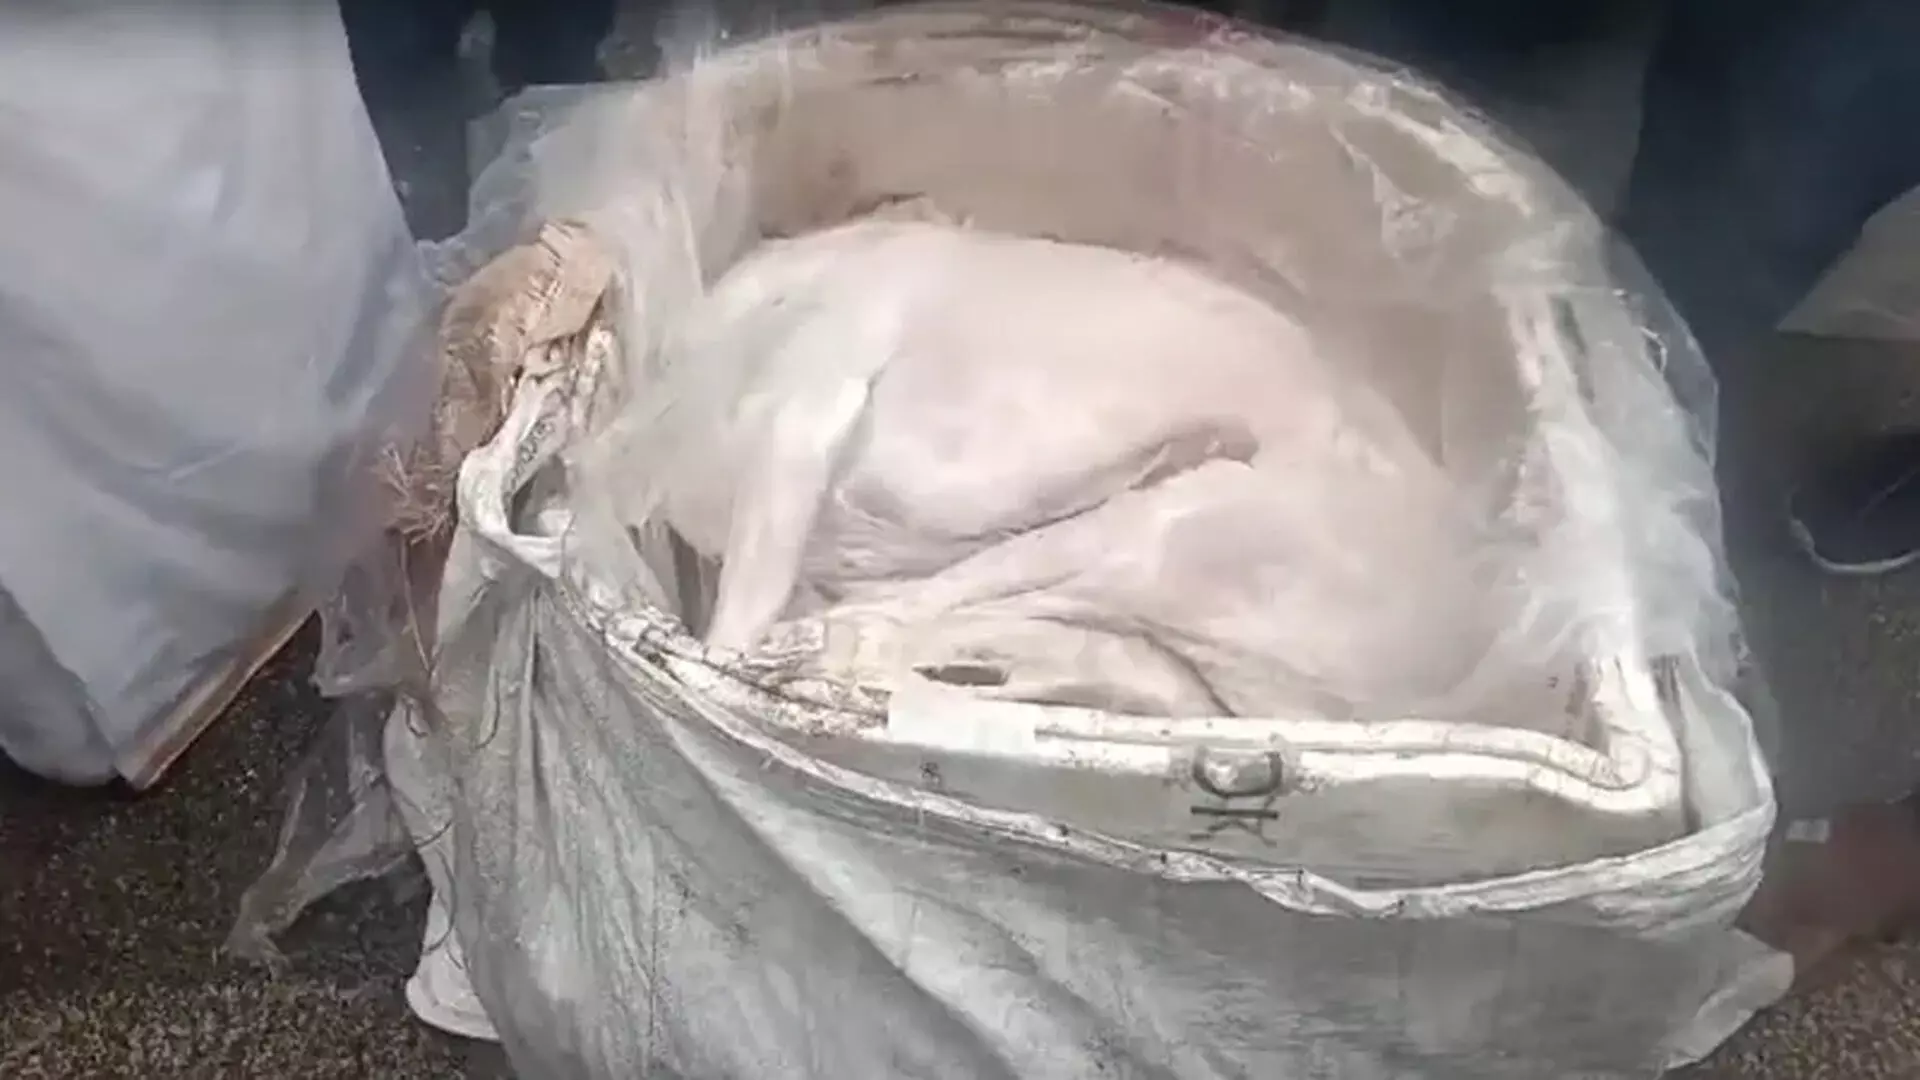 Bengaluru dog meat scandal: खाद्य सुरक्षा विभाग ने कहा, कानूनी कार्रवाई की जाएगी